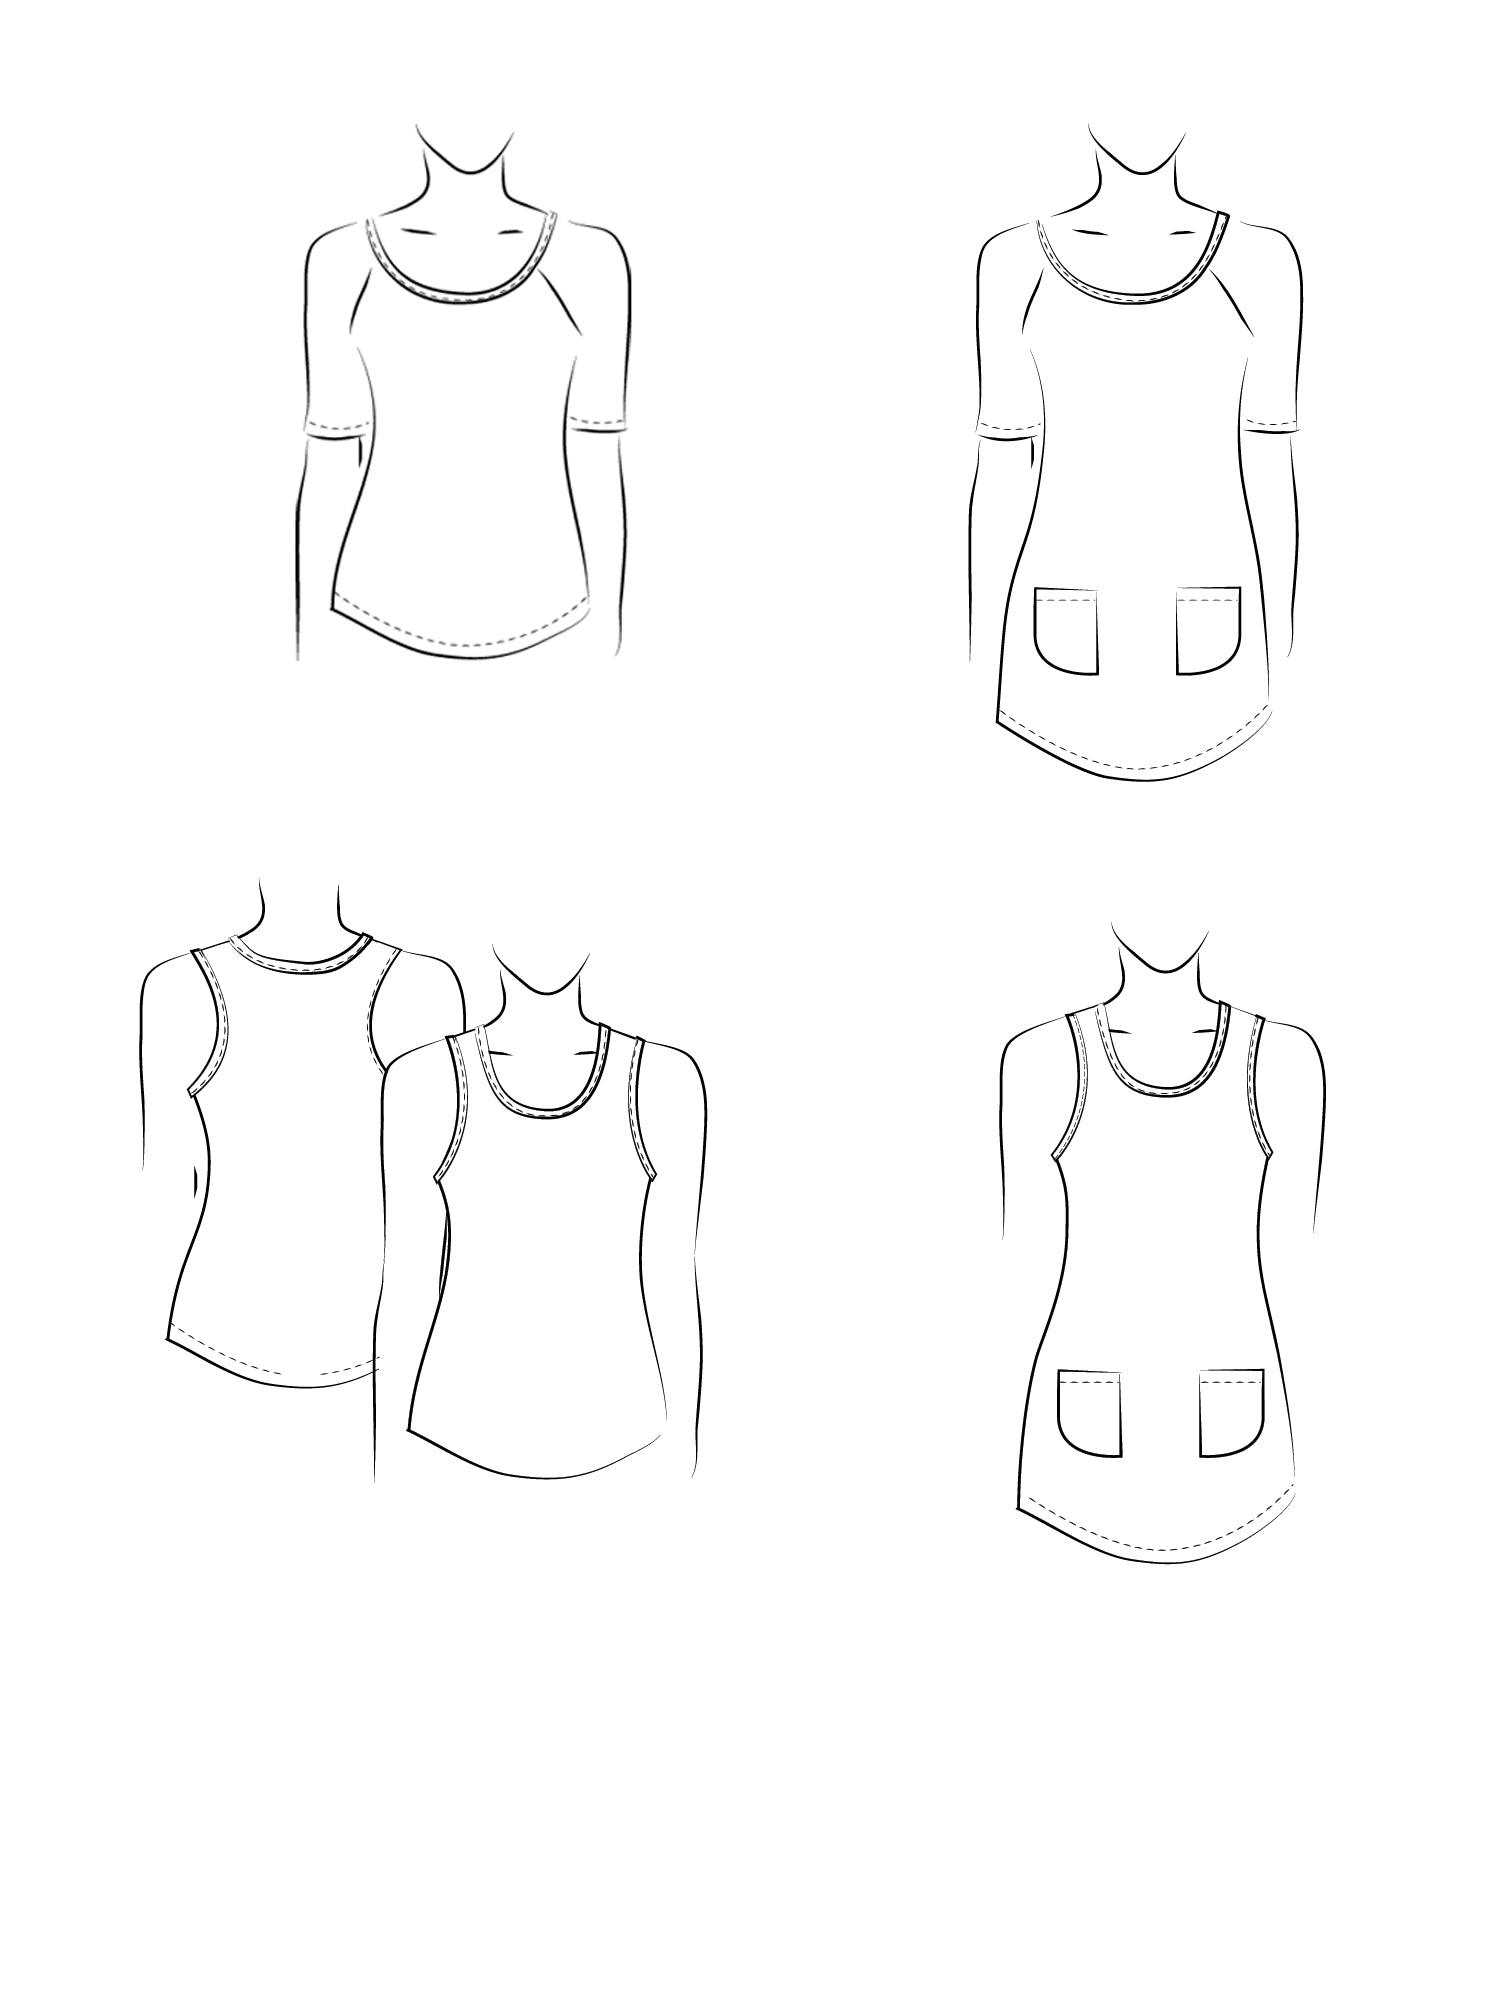 2 garments in regular or tunic lengths